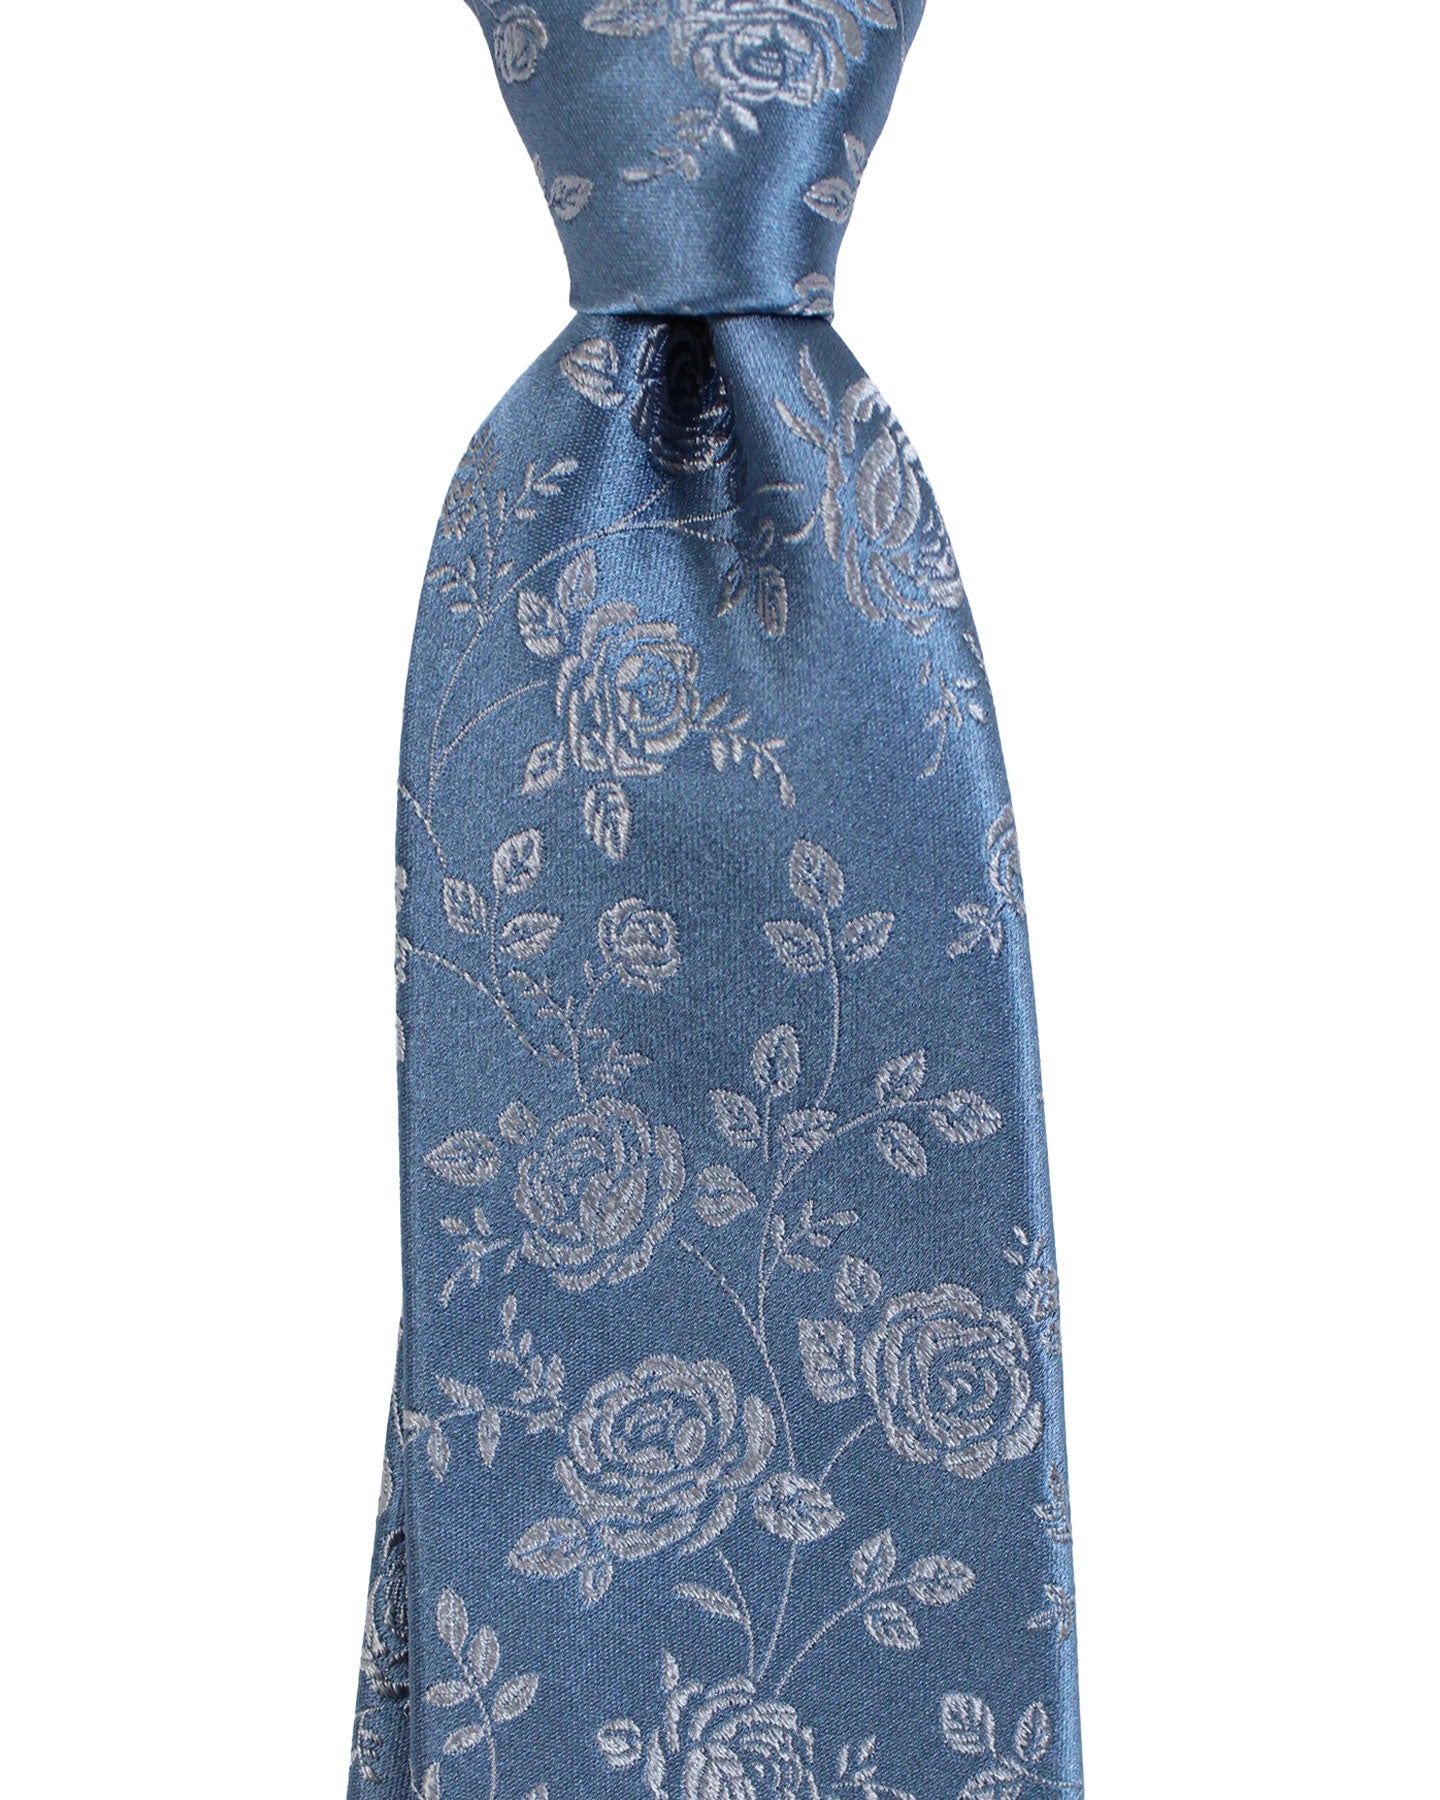 Kiton Silk Tie Midnight Blue Gray Floral Roses - Sevenfold Necktie